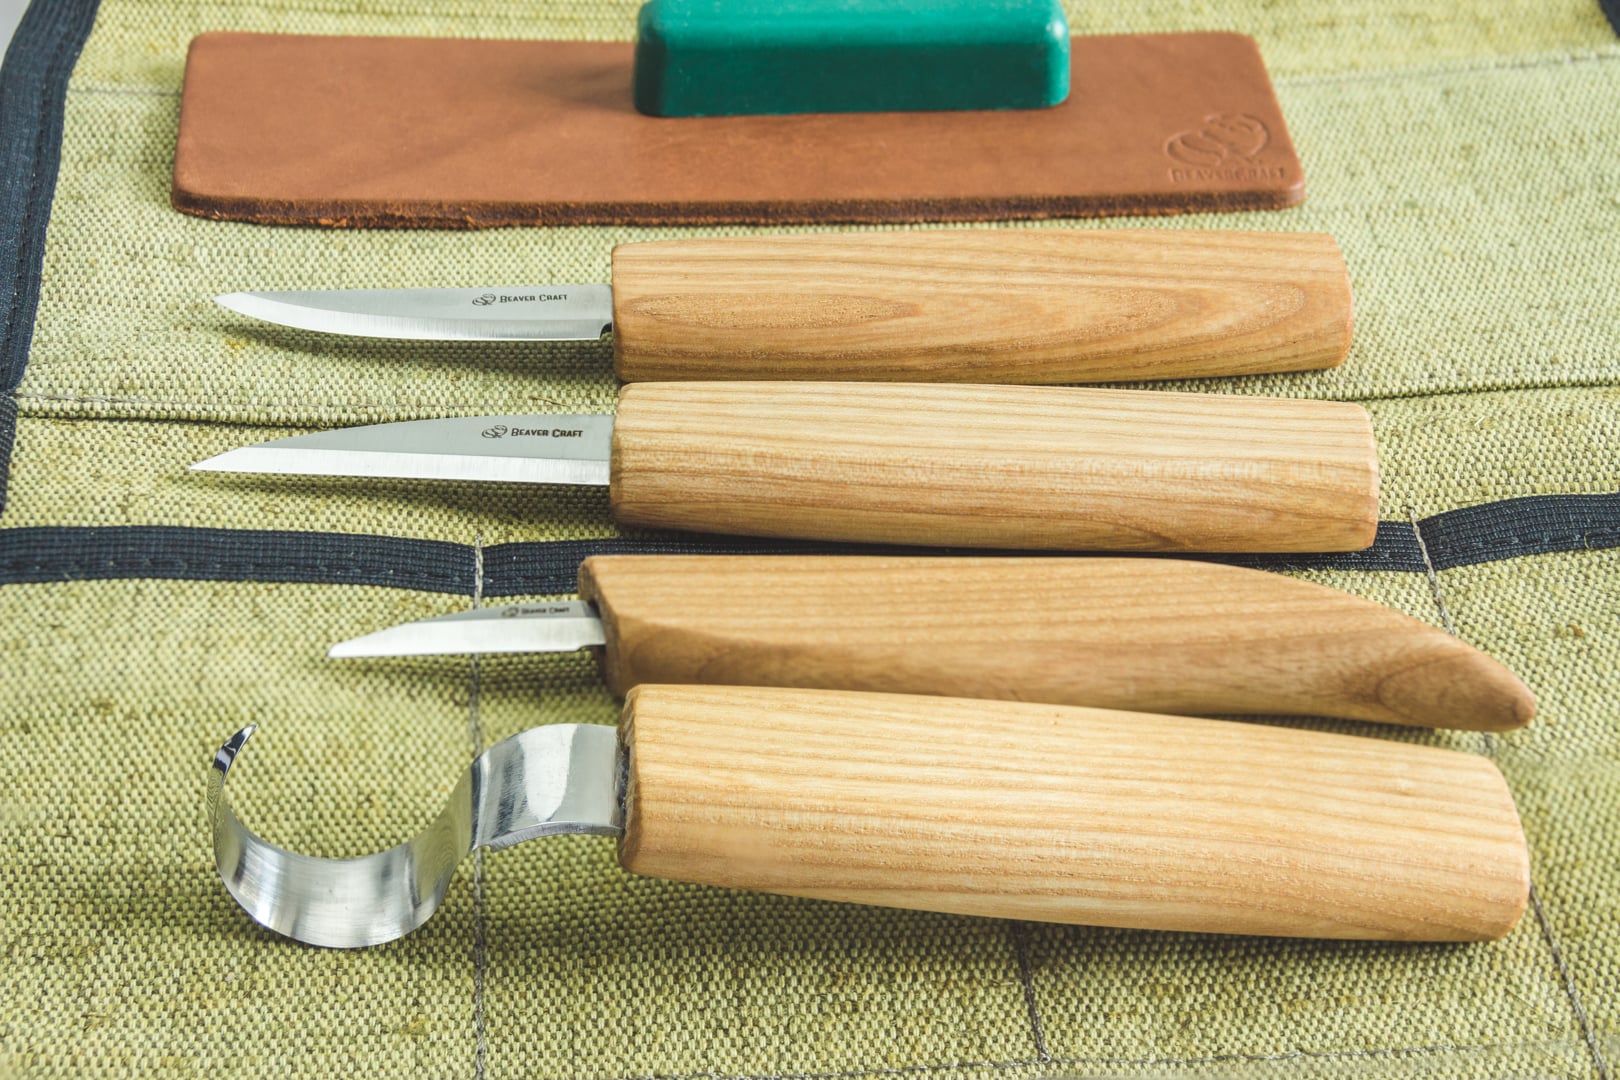 Wood carving set of 10 tools professional wood carving set BeaverCraft